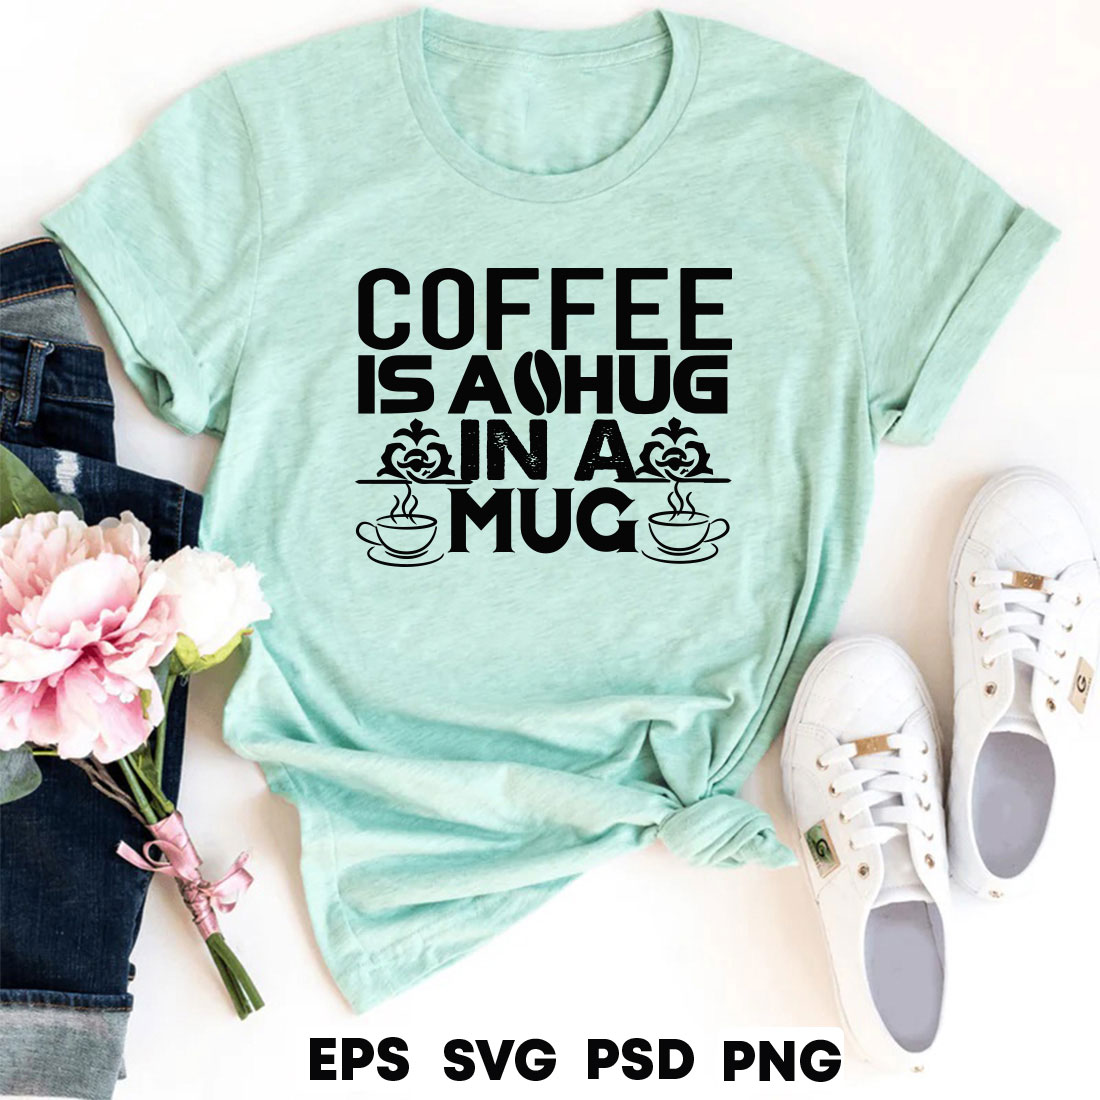 coffee is a hug in a mug cover image.